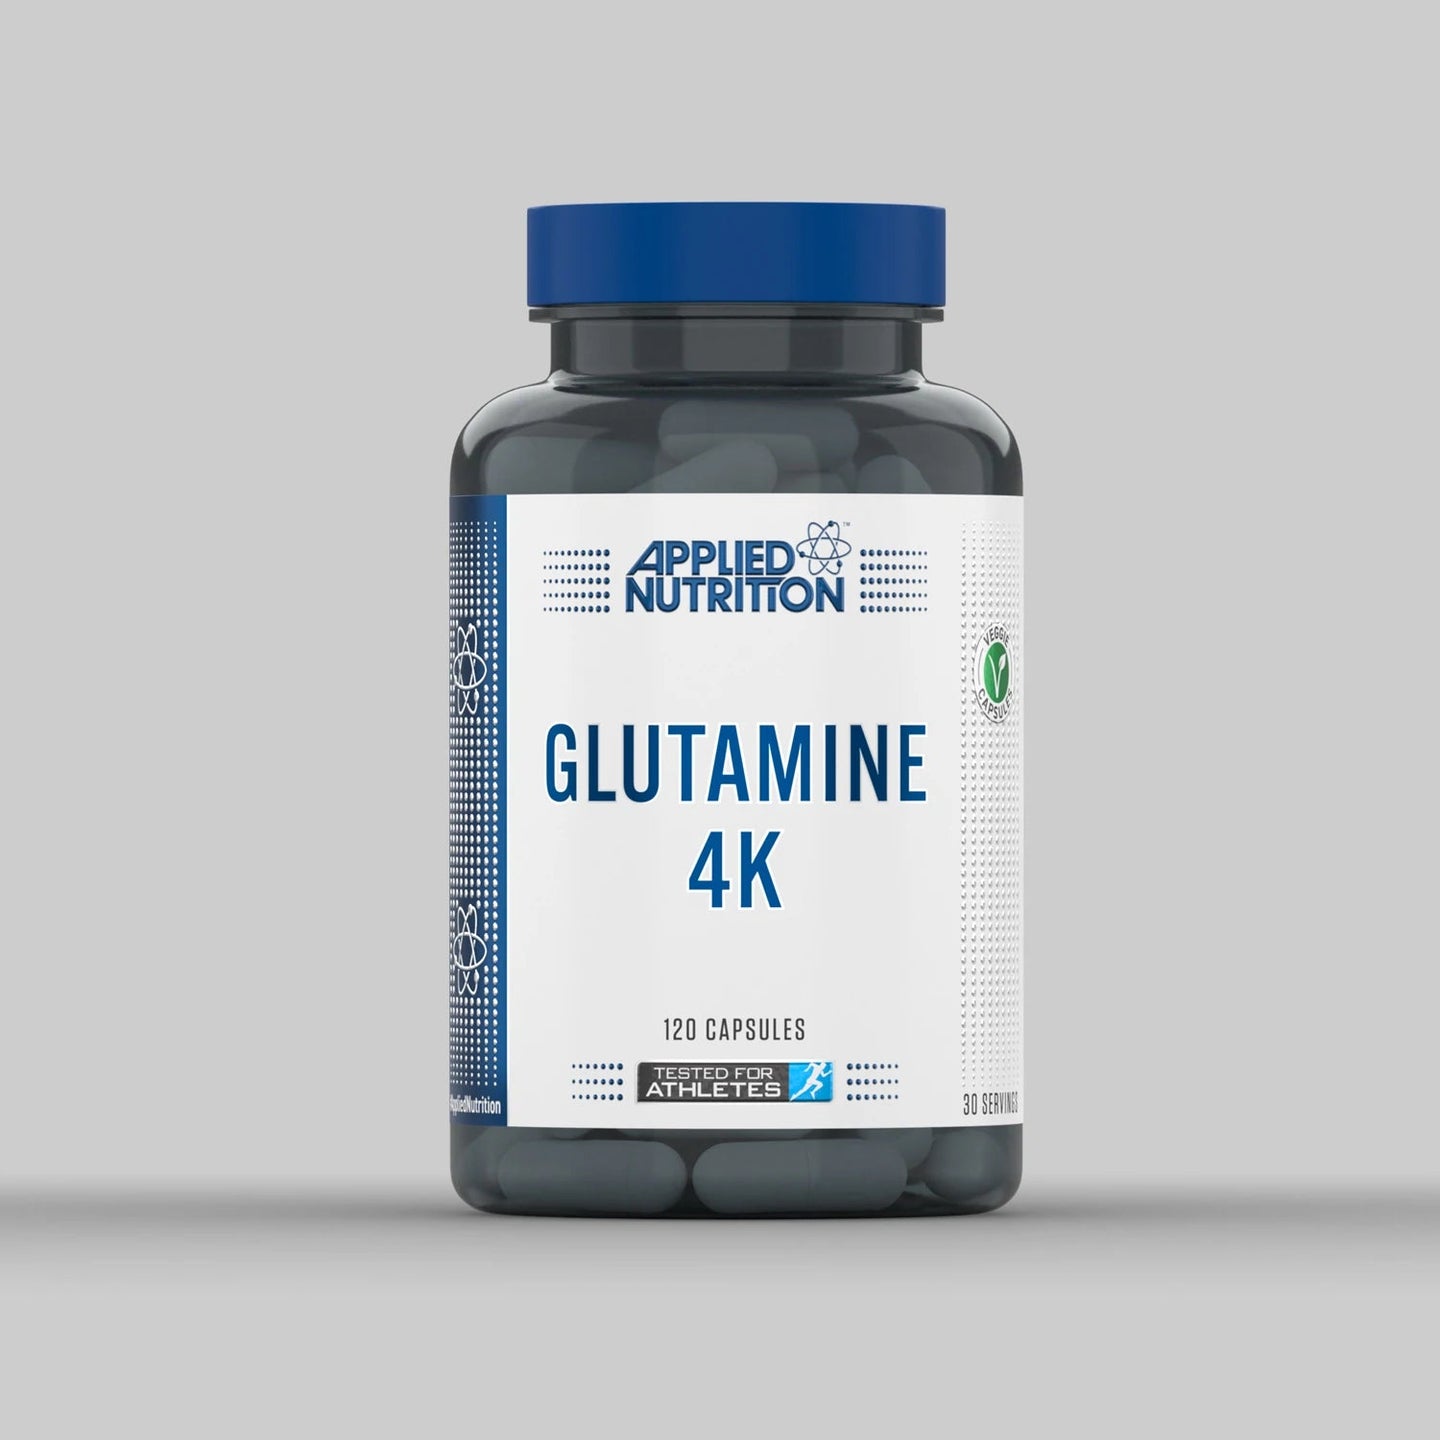 Applied Nutrition Glutamine 4K - 120 Capsules